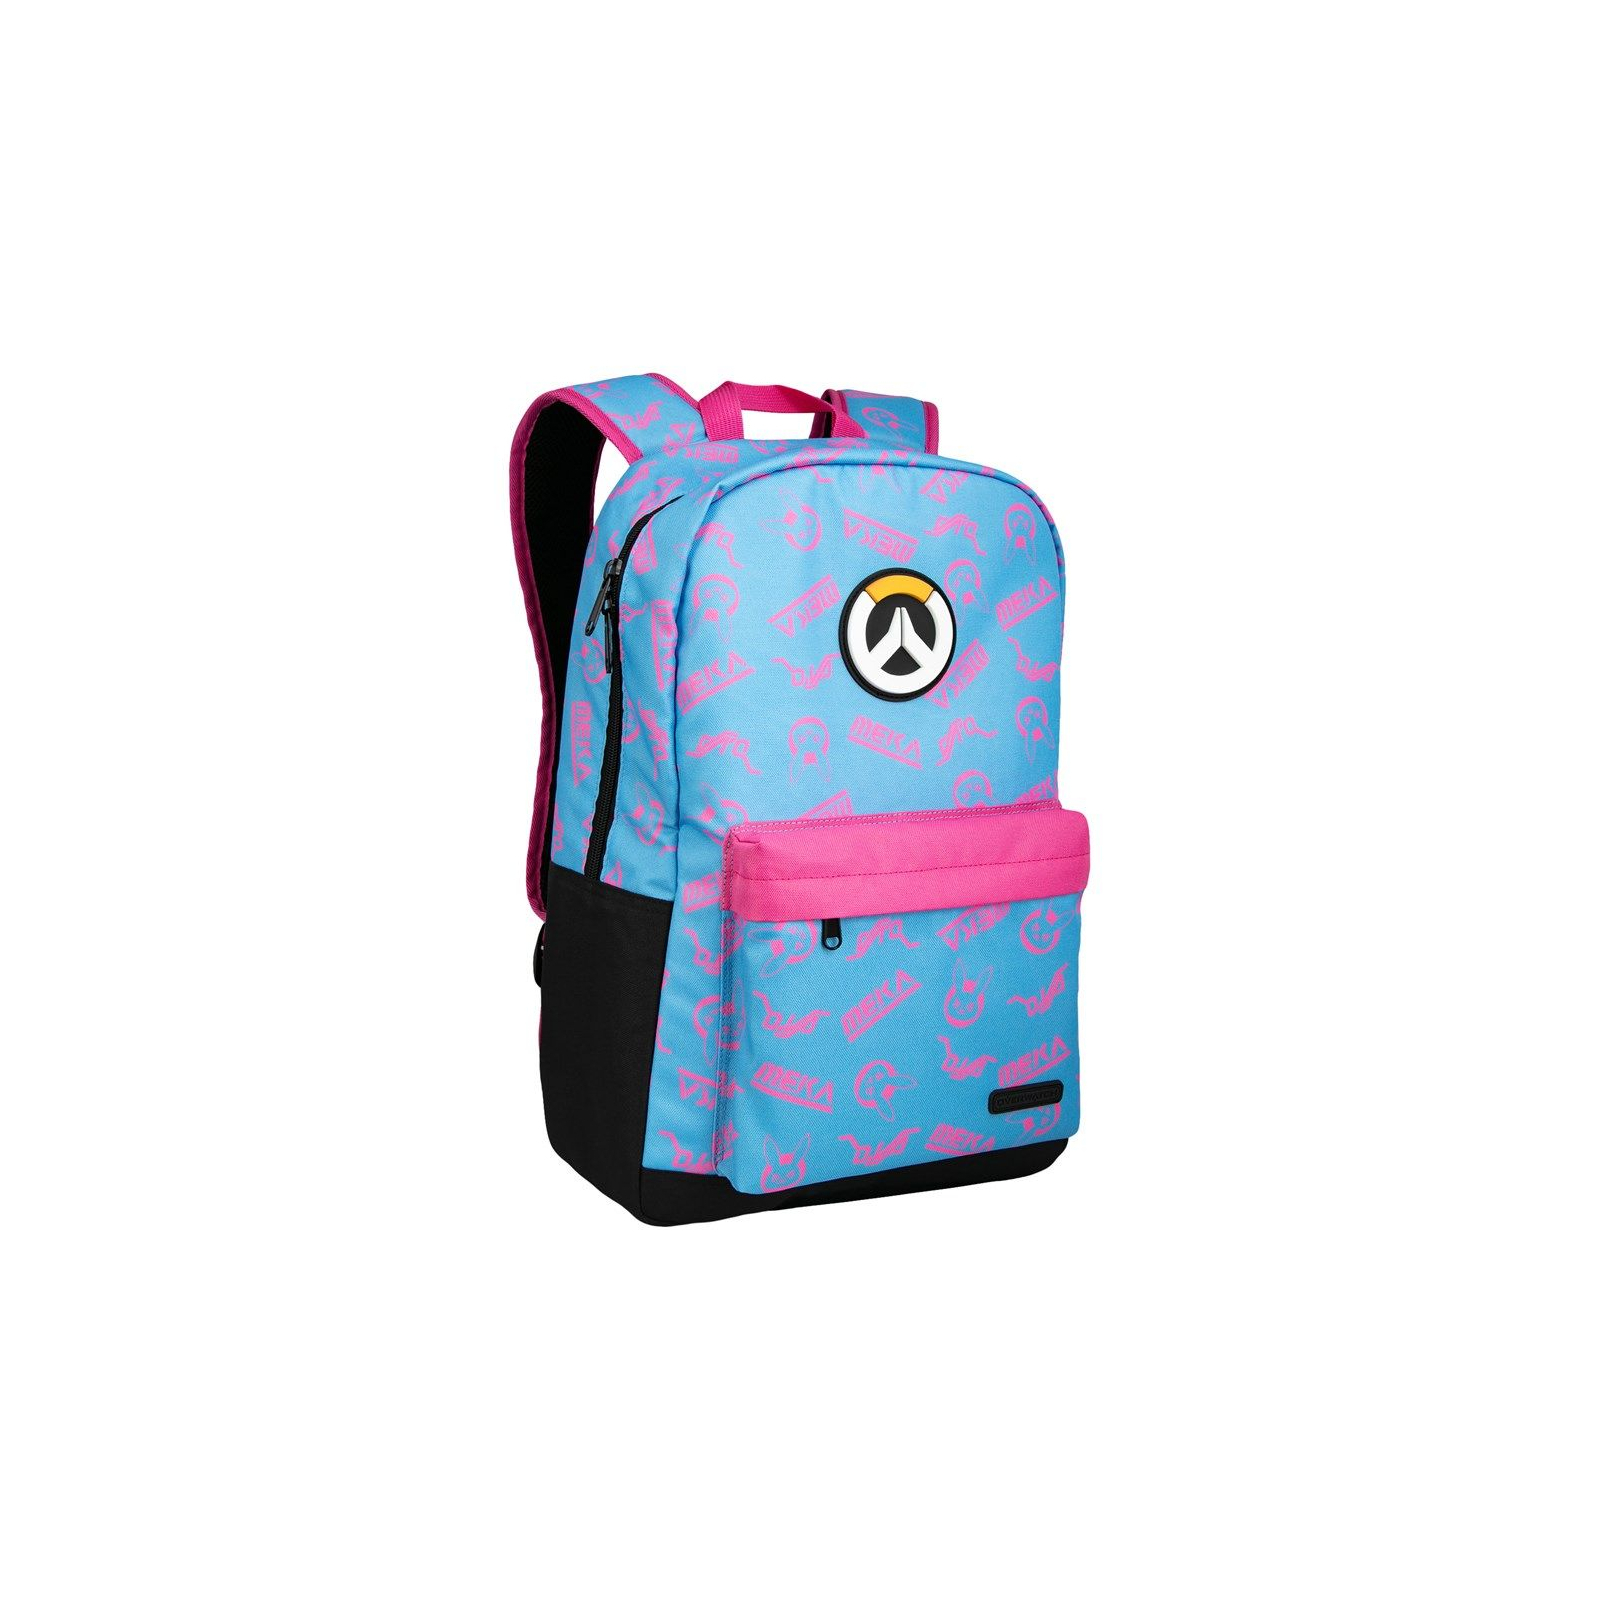 Рюкзак школьный Jinx Overwatch D.Va Splash Backpack Blue/Pink (JINX-9490 PK)